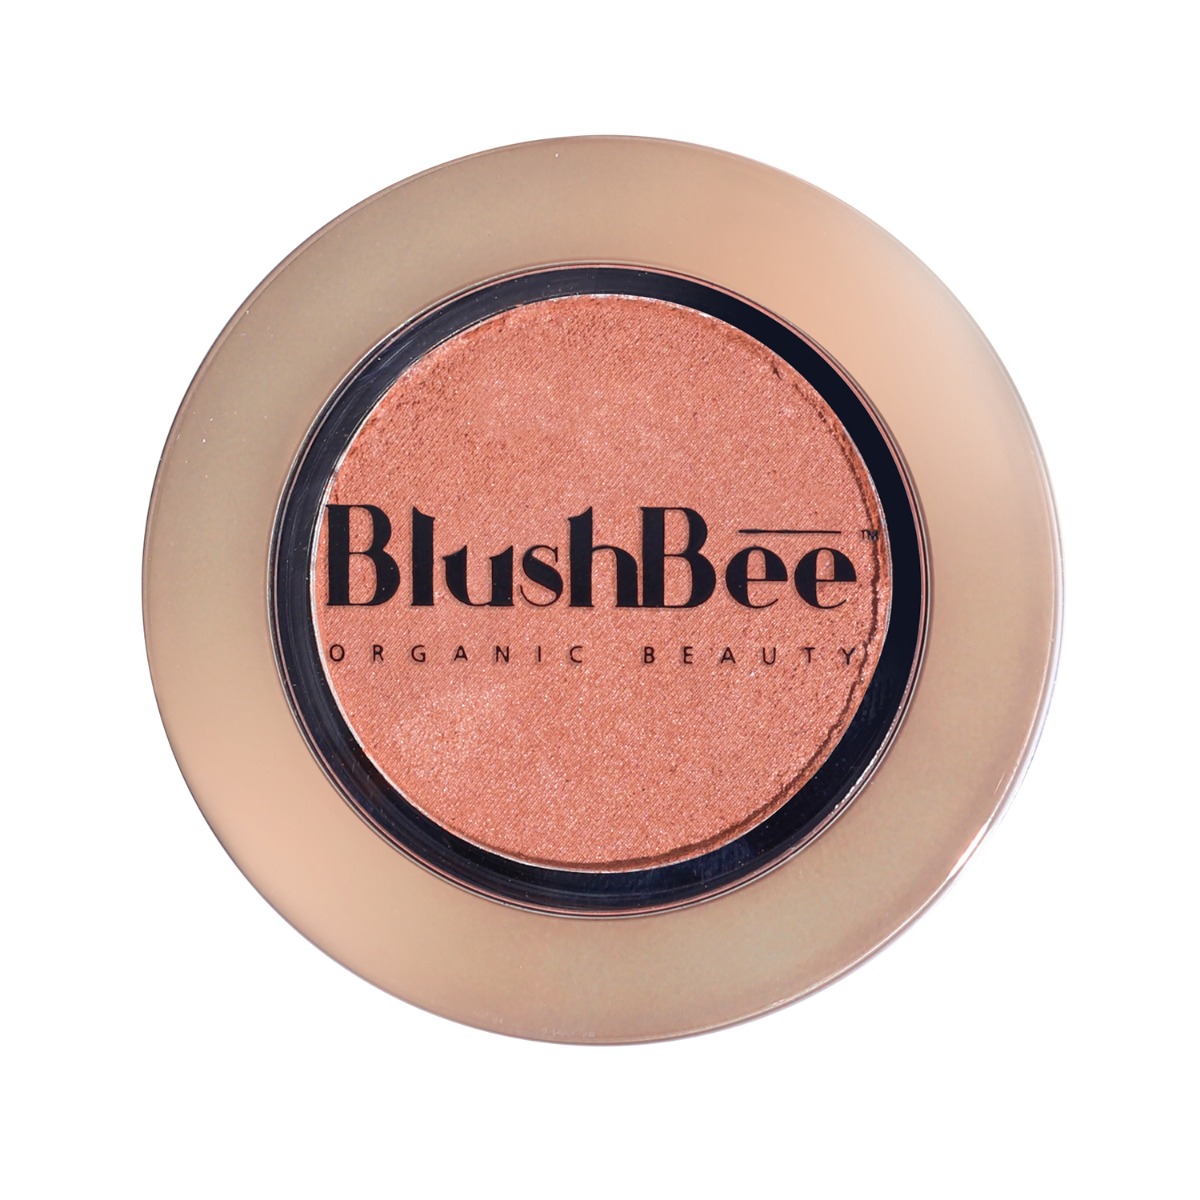 BlushBee Organic Beauty Natural Glow Organic Blush - Forna, 2.3gm